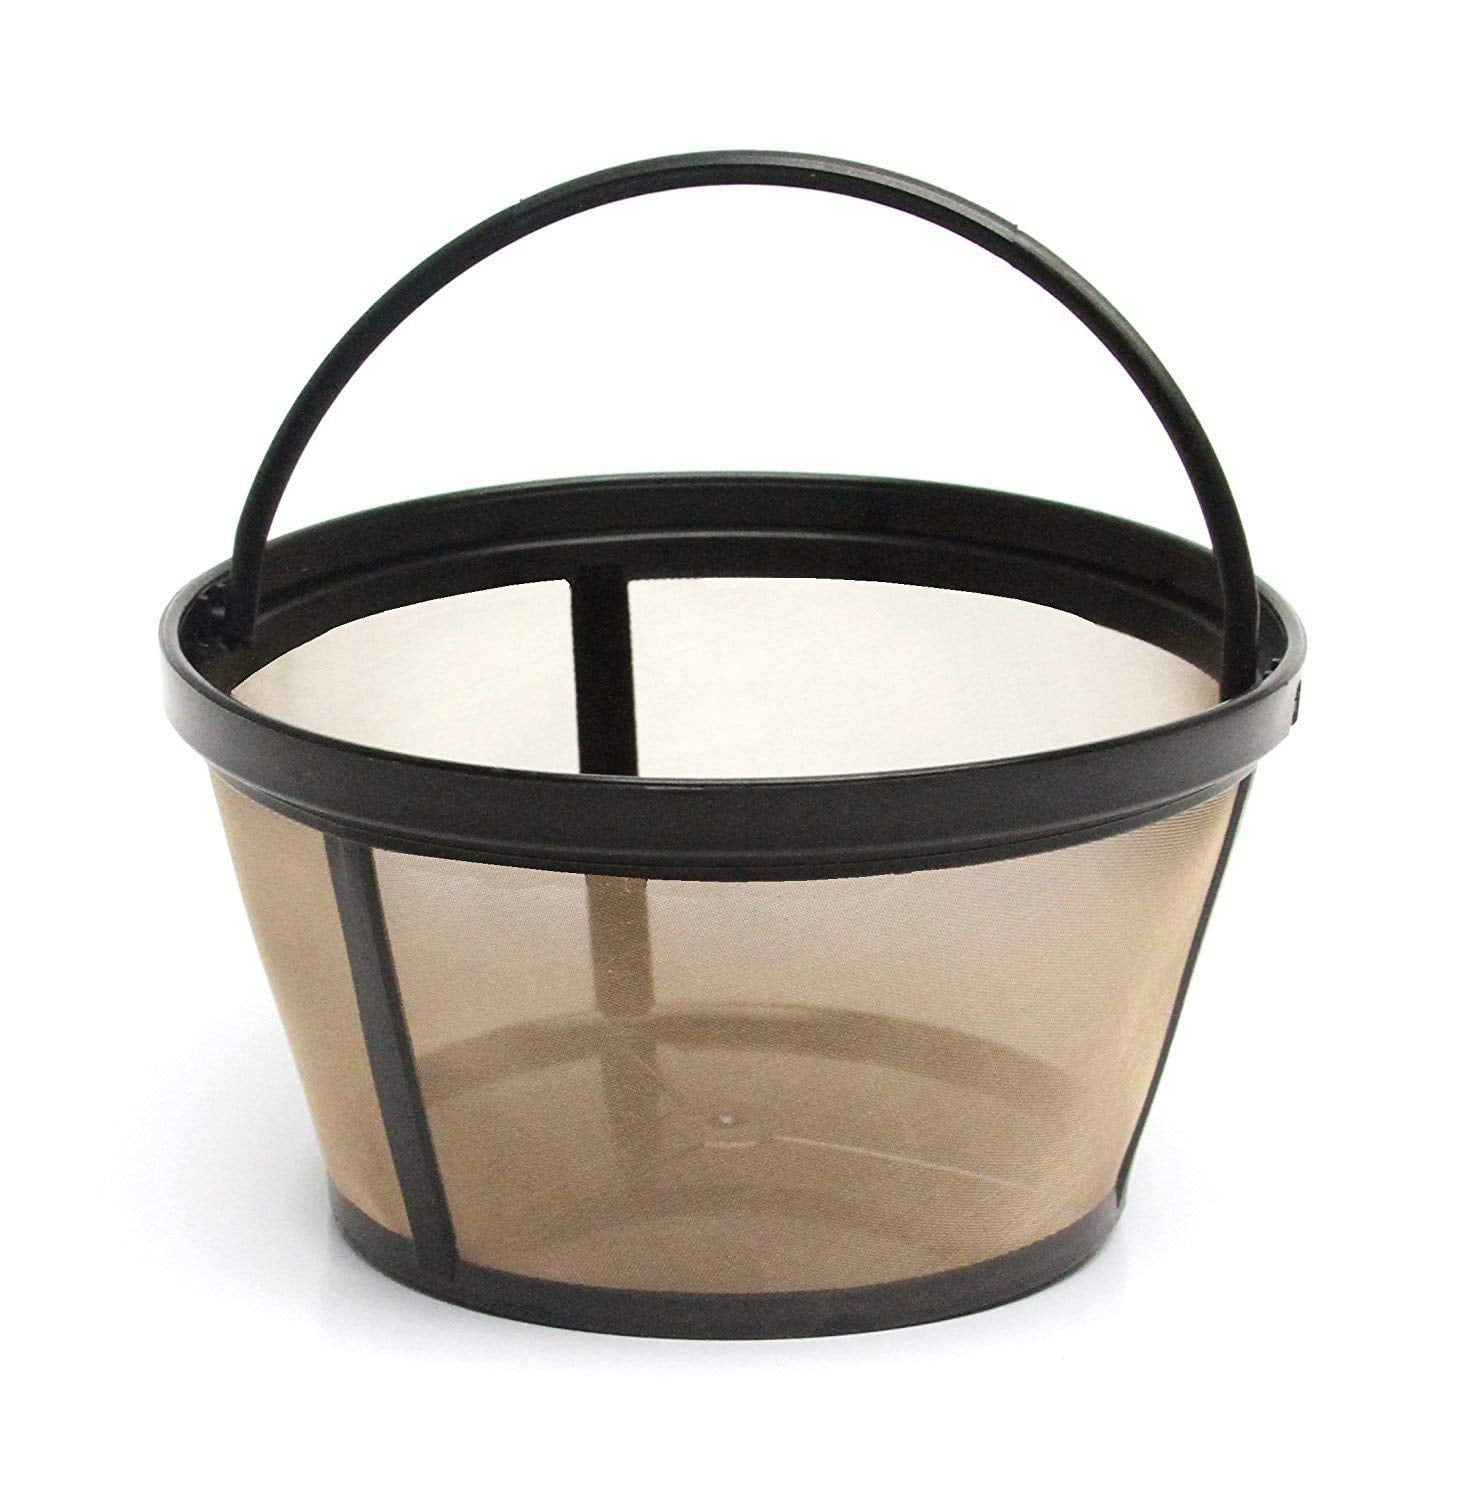 Coffee Machine Brewing Basket Bottom spring loaded stopper kits Fits for  Hamilton Beach CoffeeMaker Brew Basket 990117900 990237500